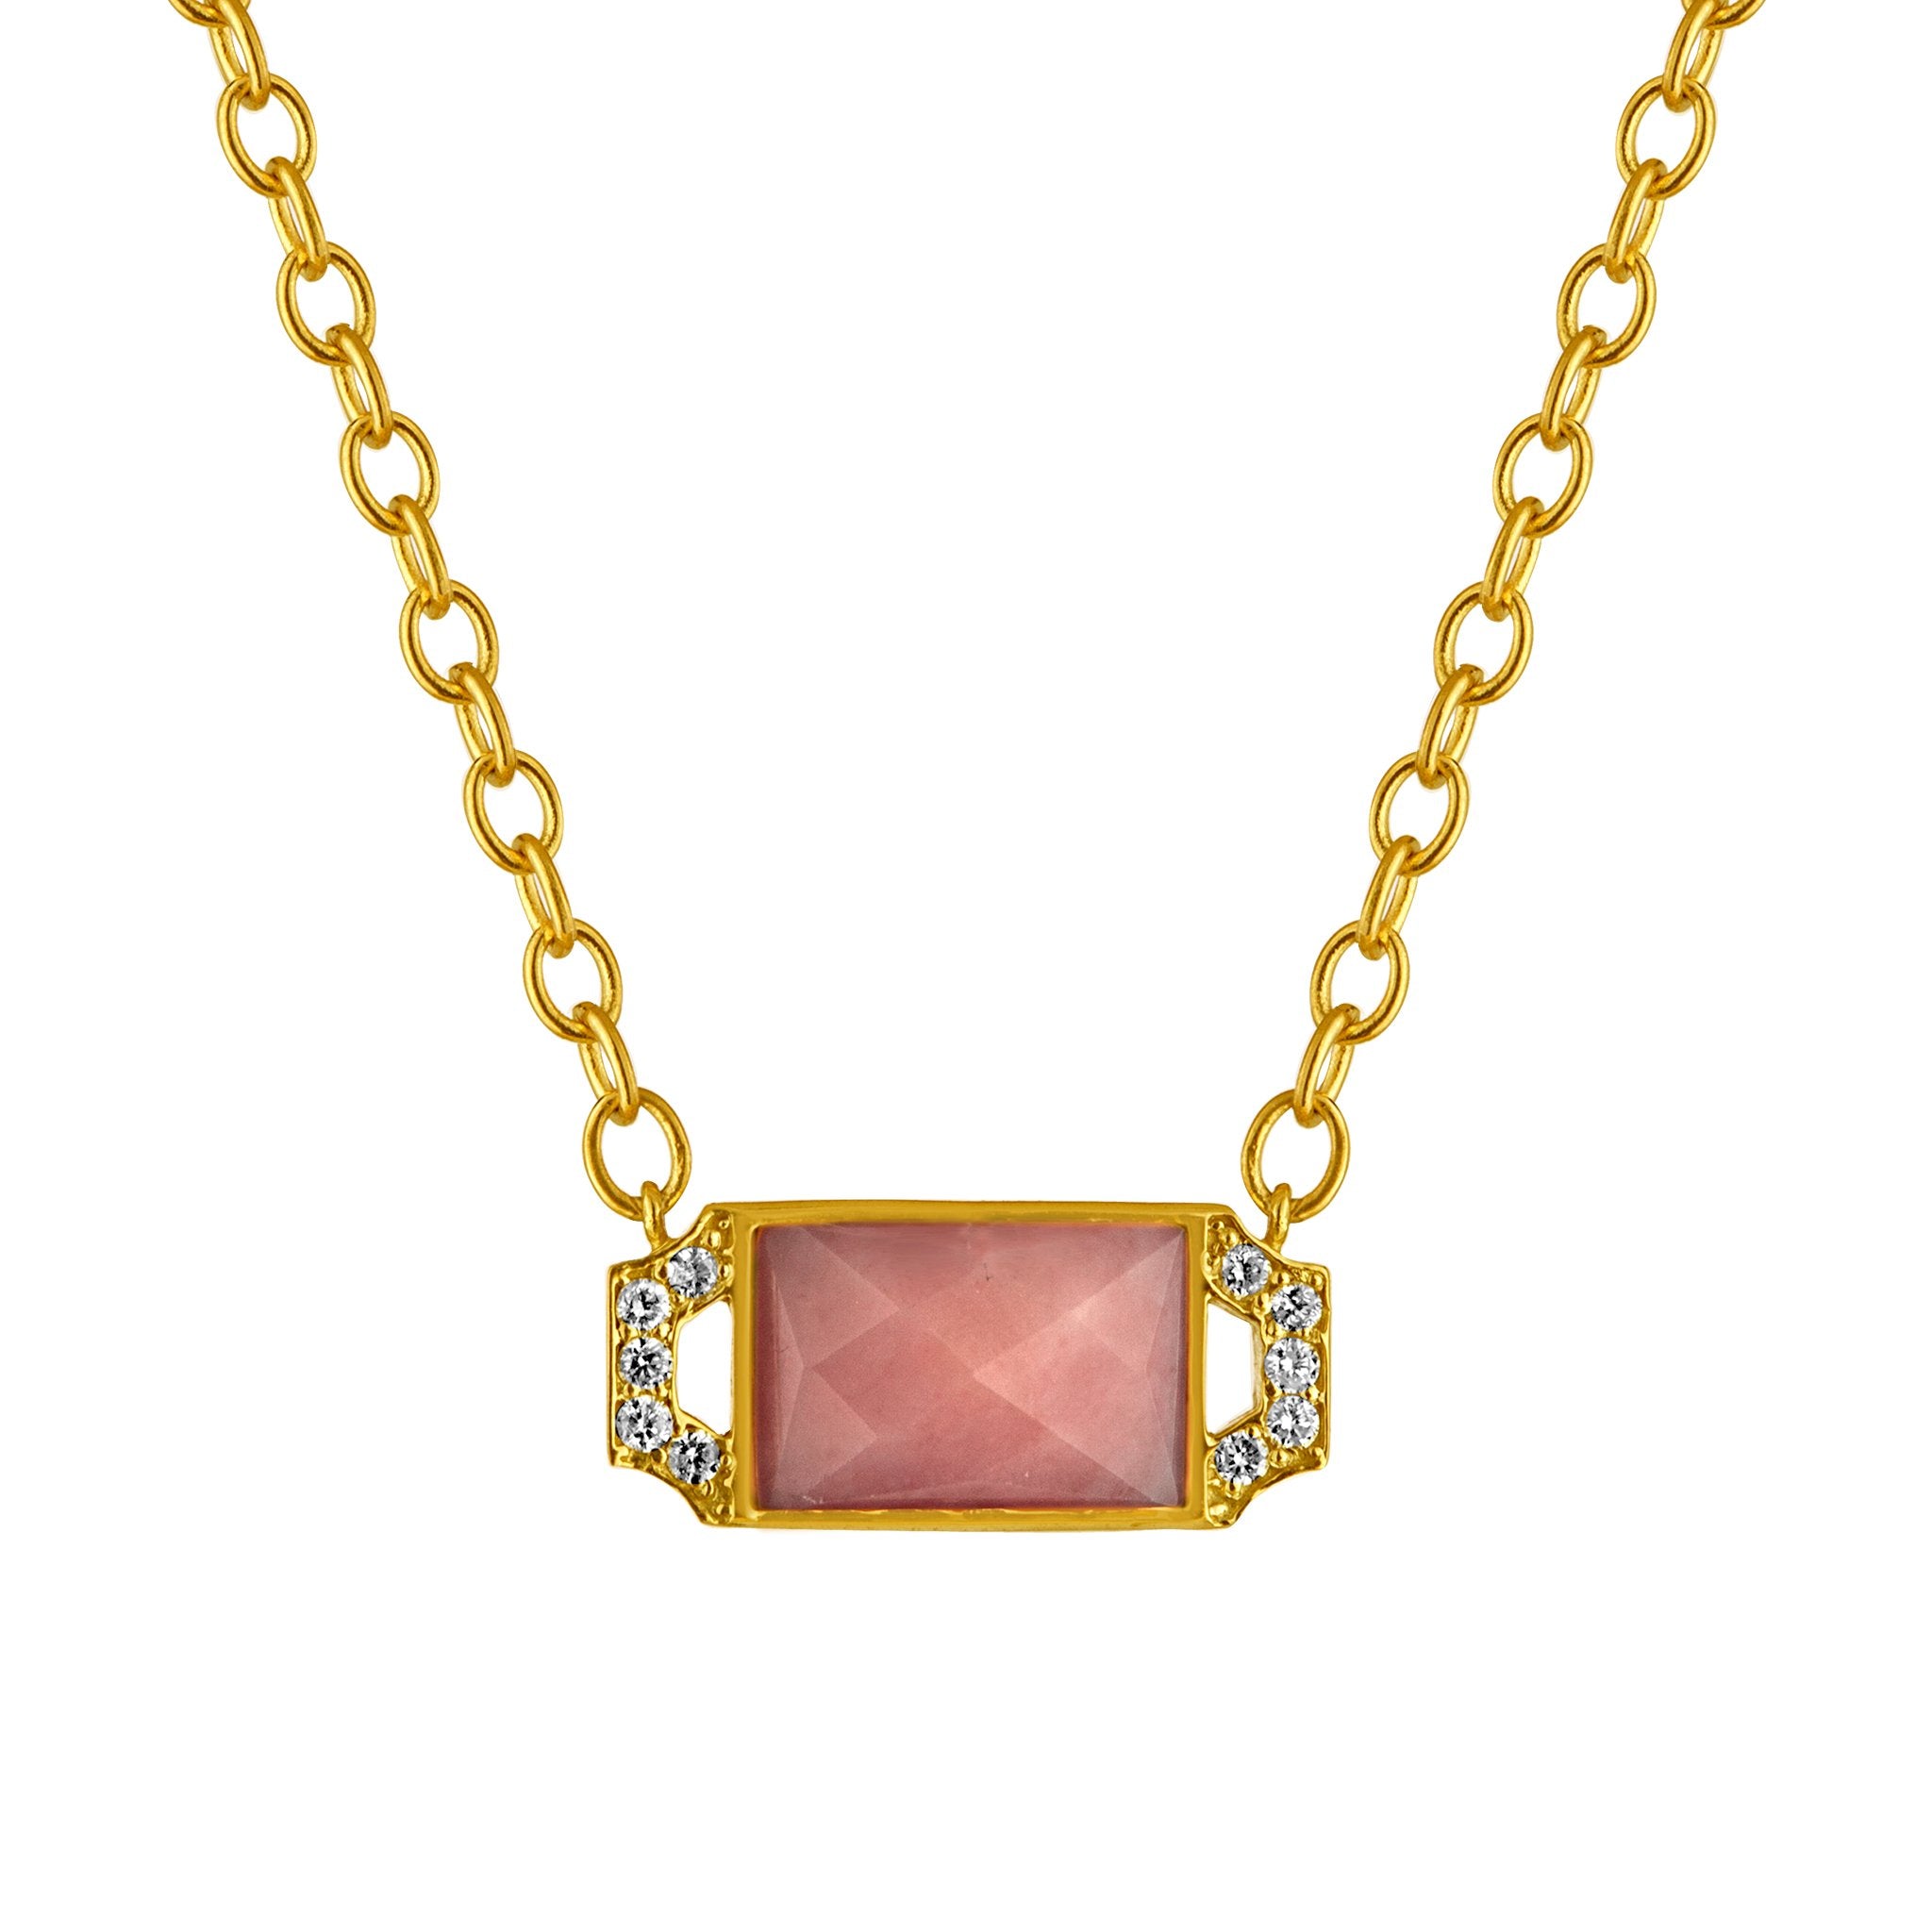 Edge Petite Pendant Necklace: 18k Gold, Pink Opal, Diamonds